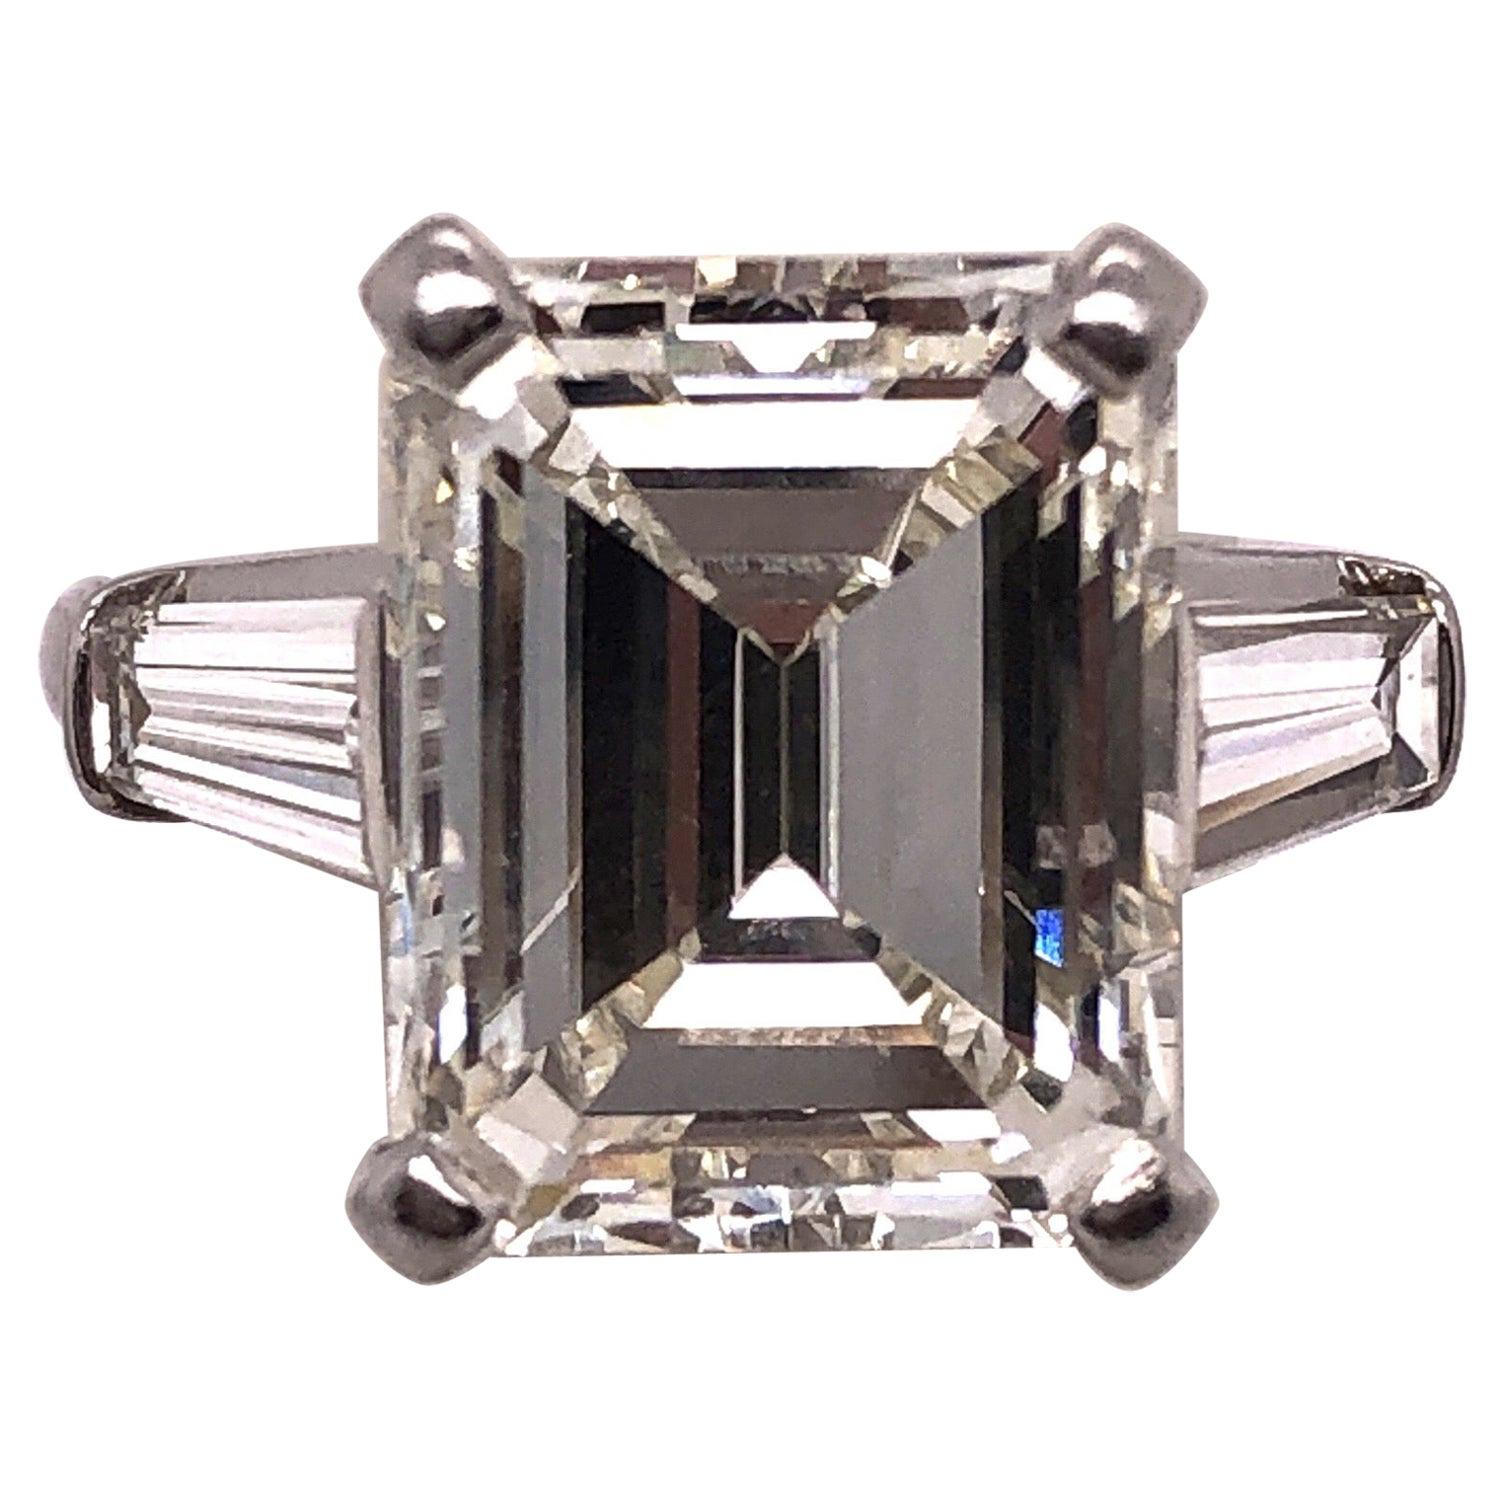 6.43 Carat Emerald Cut Diamond Engagement Ring VS1 J/K Color, Platinum Setting